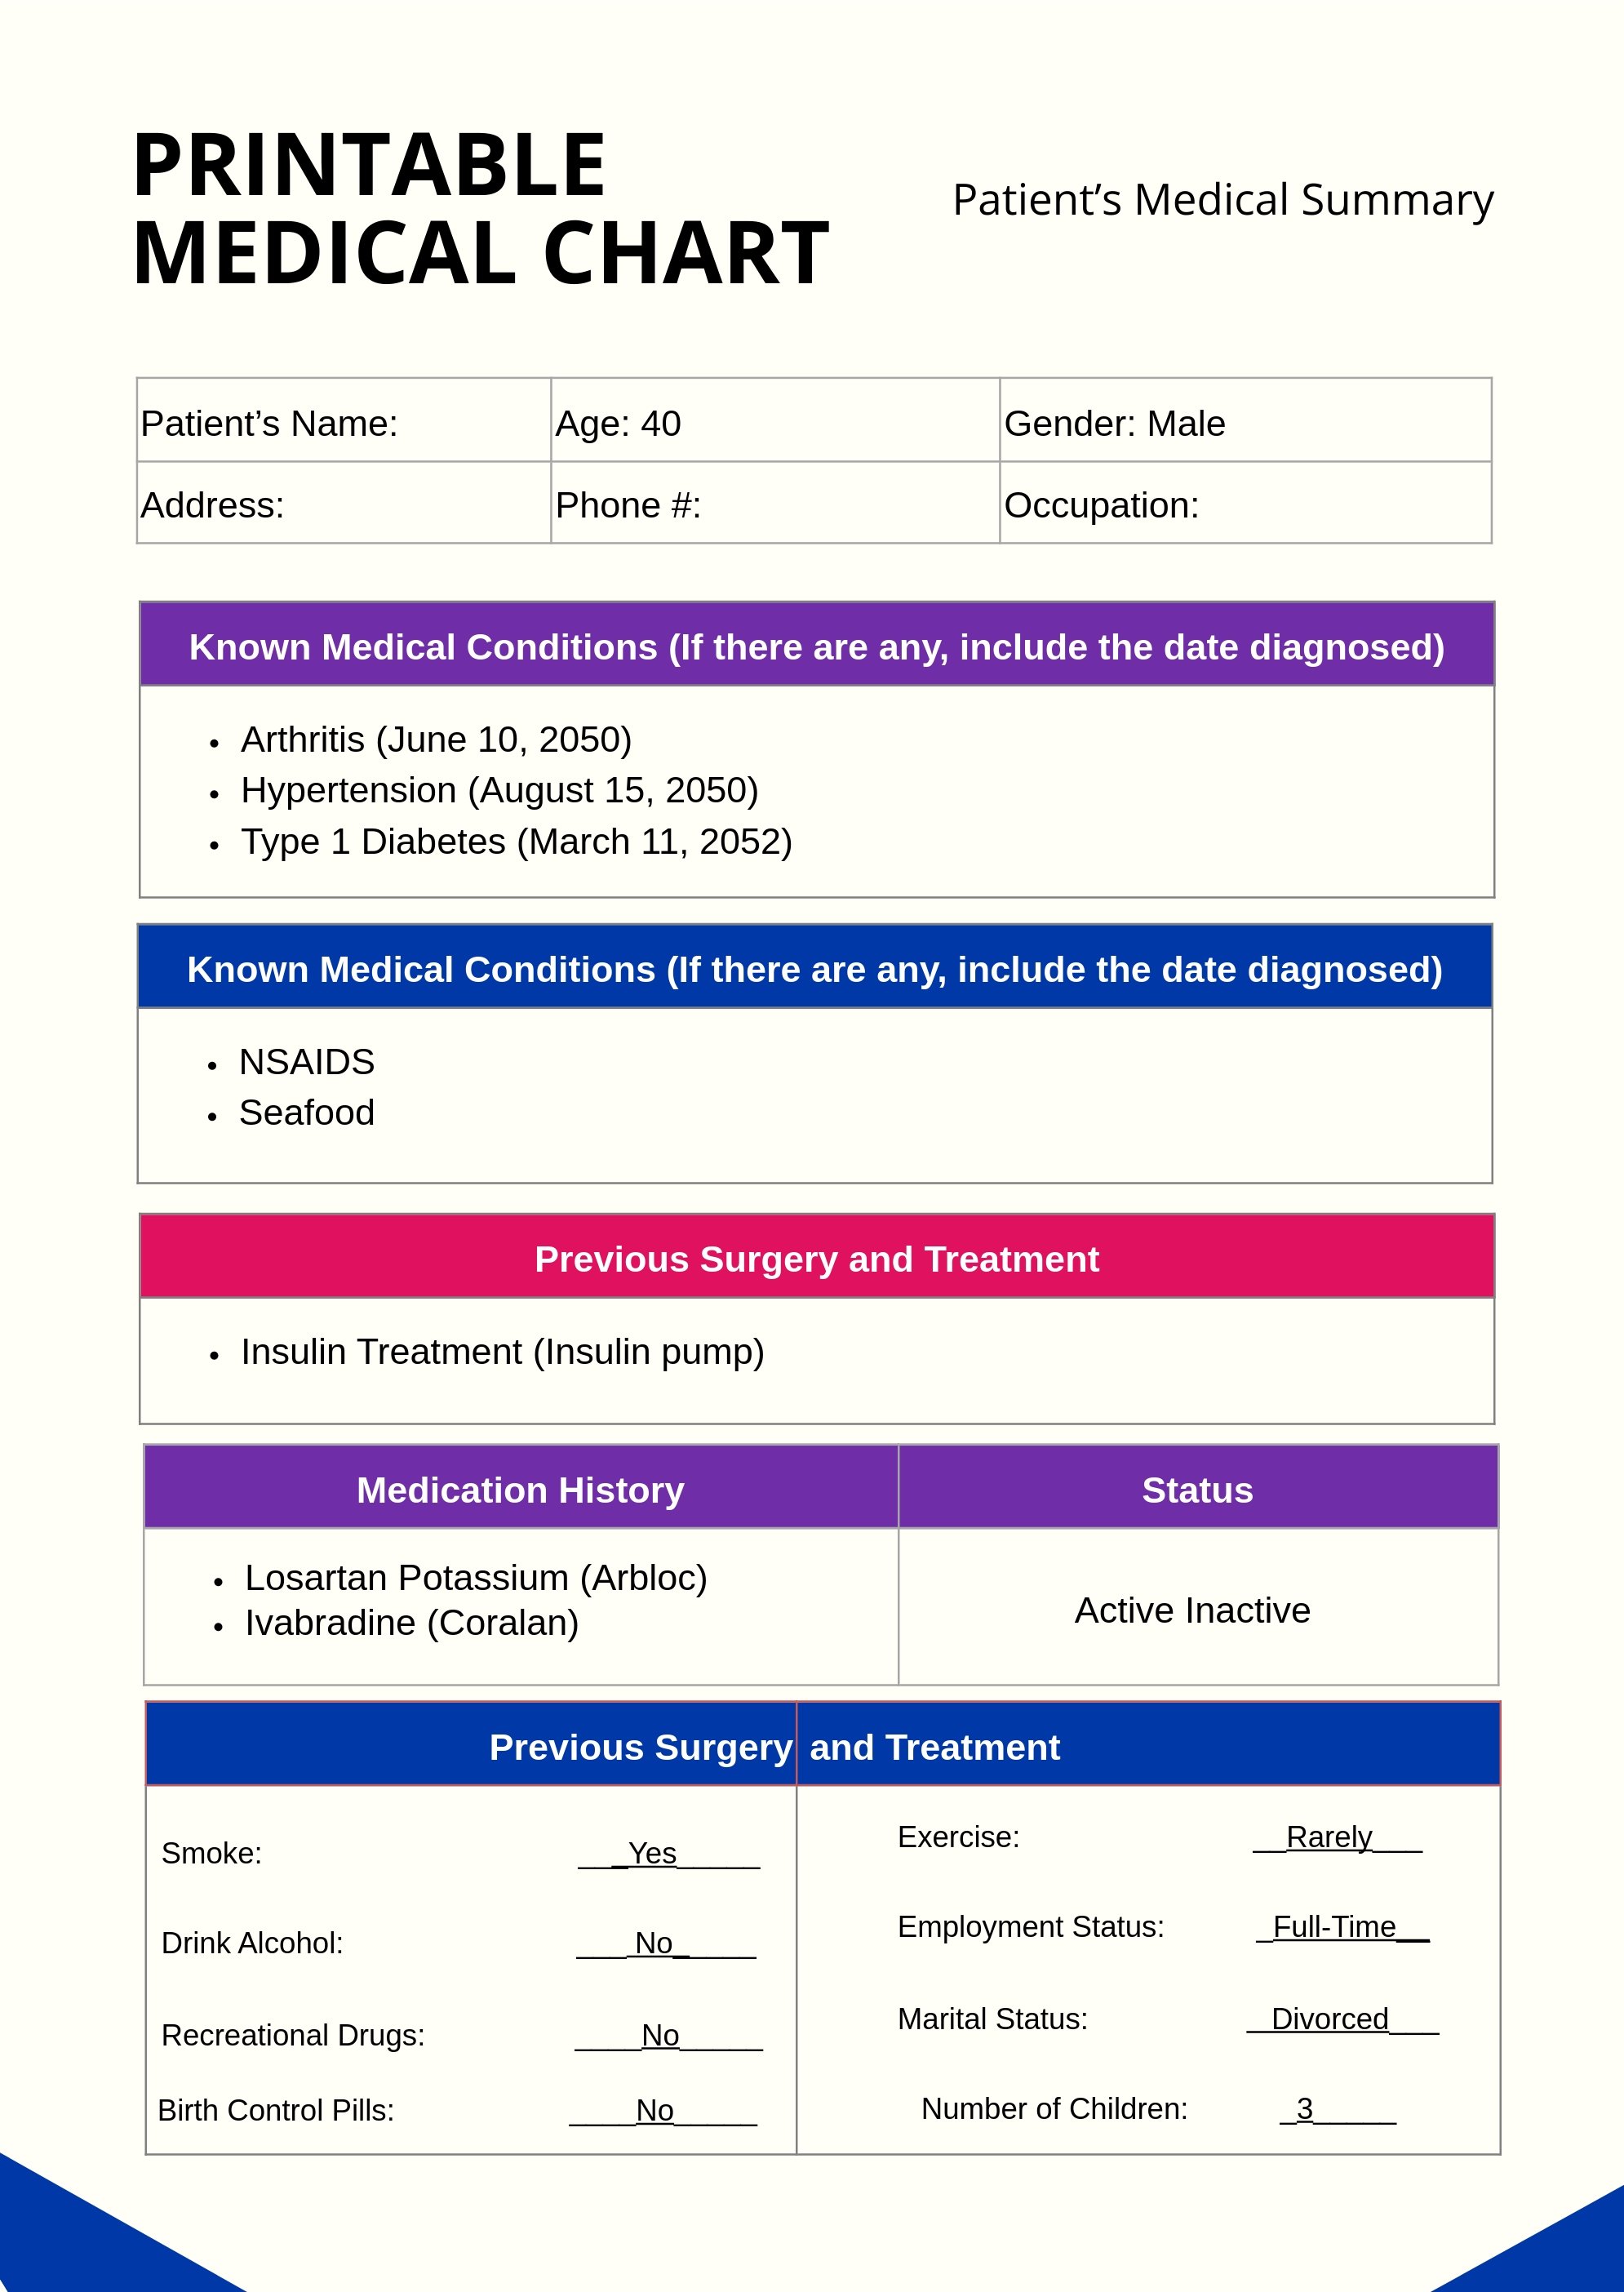 Printable Medical Chart in PDF, Illustrator